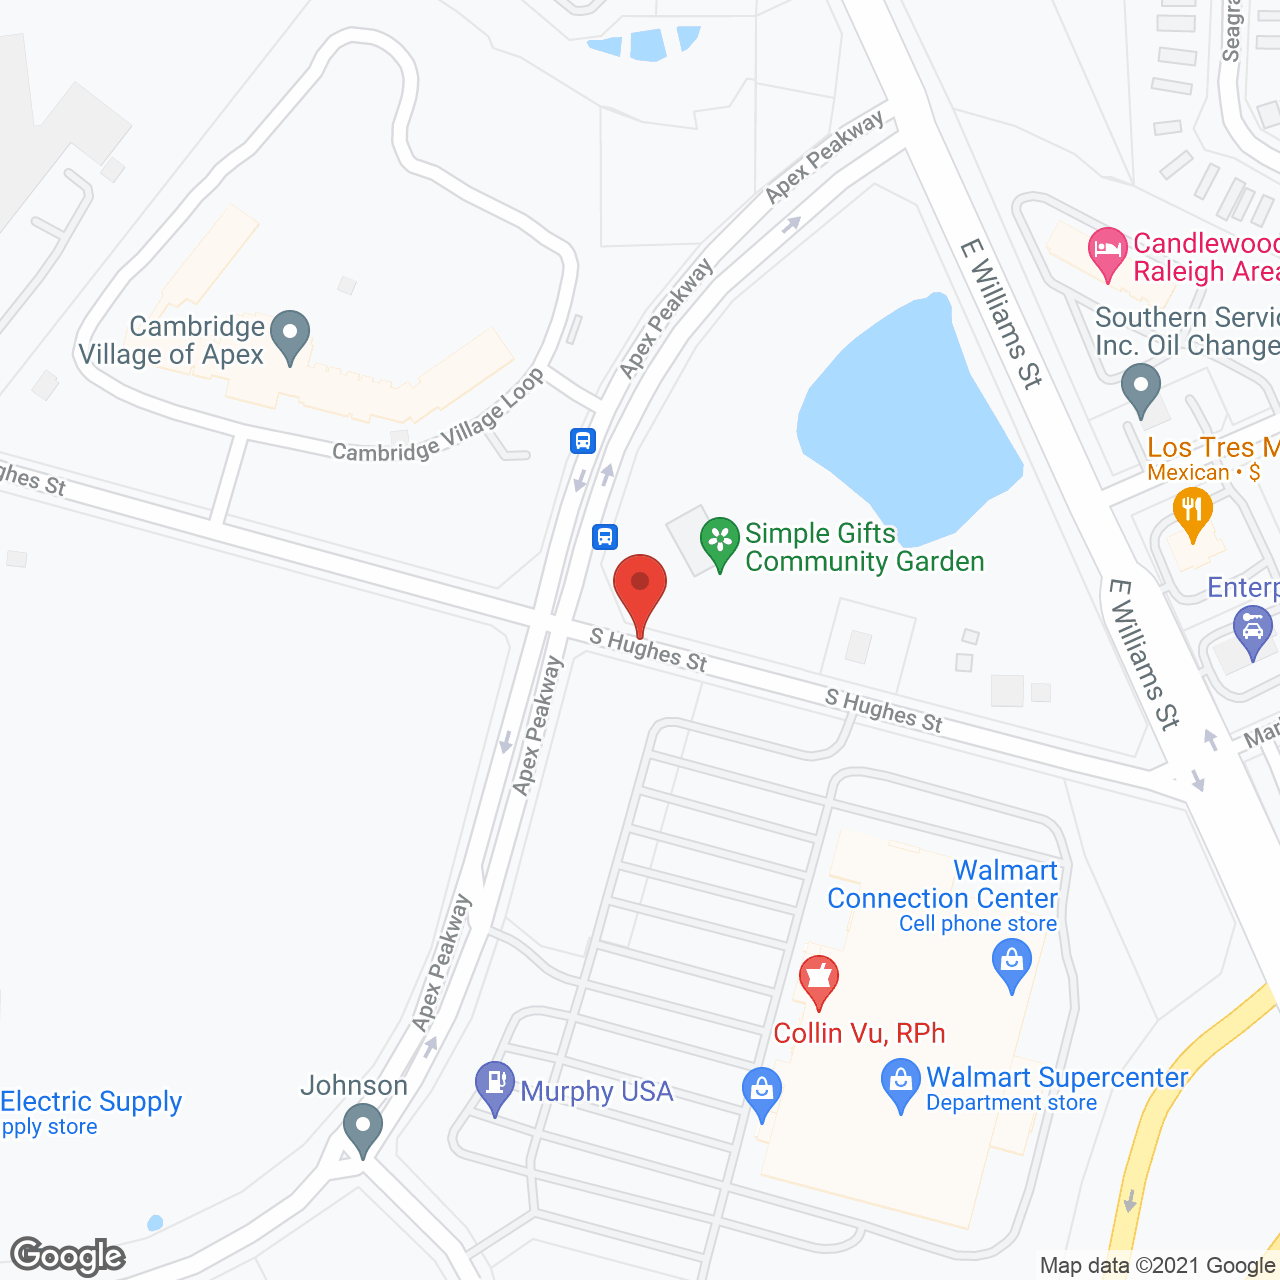 Cambridge Village of Apex in google map